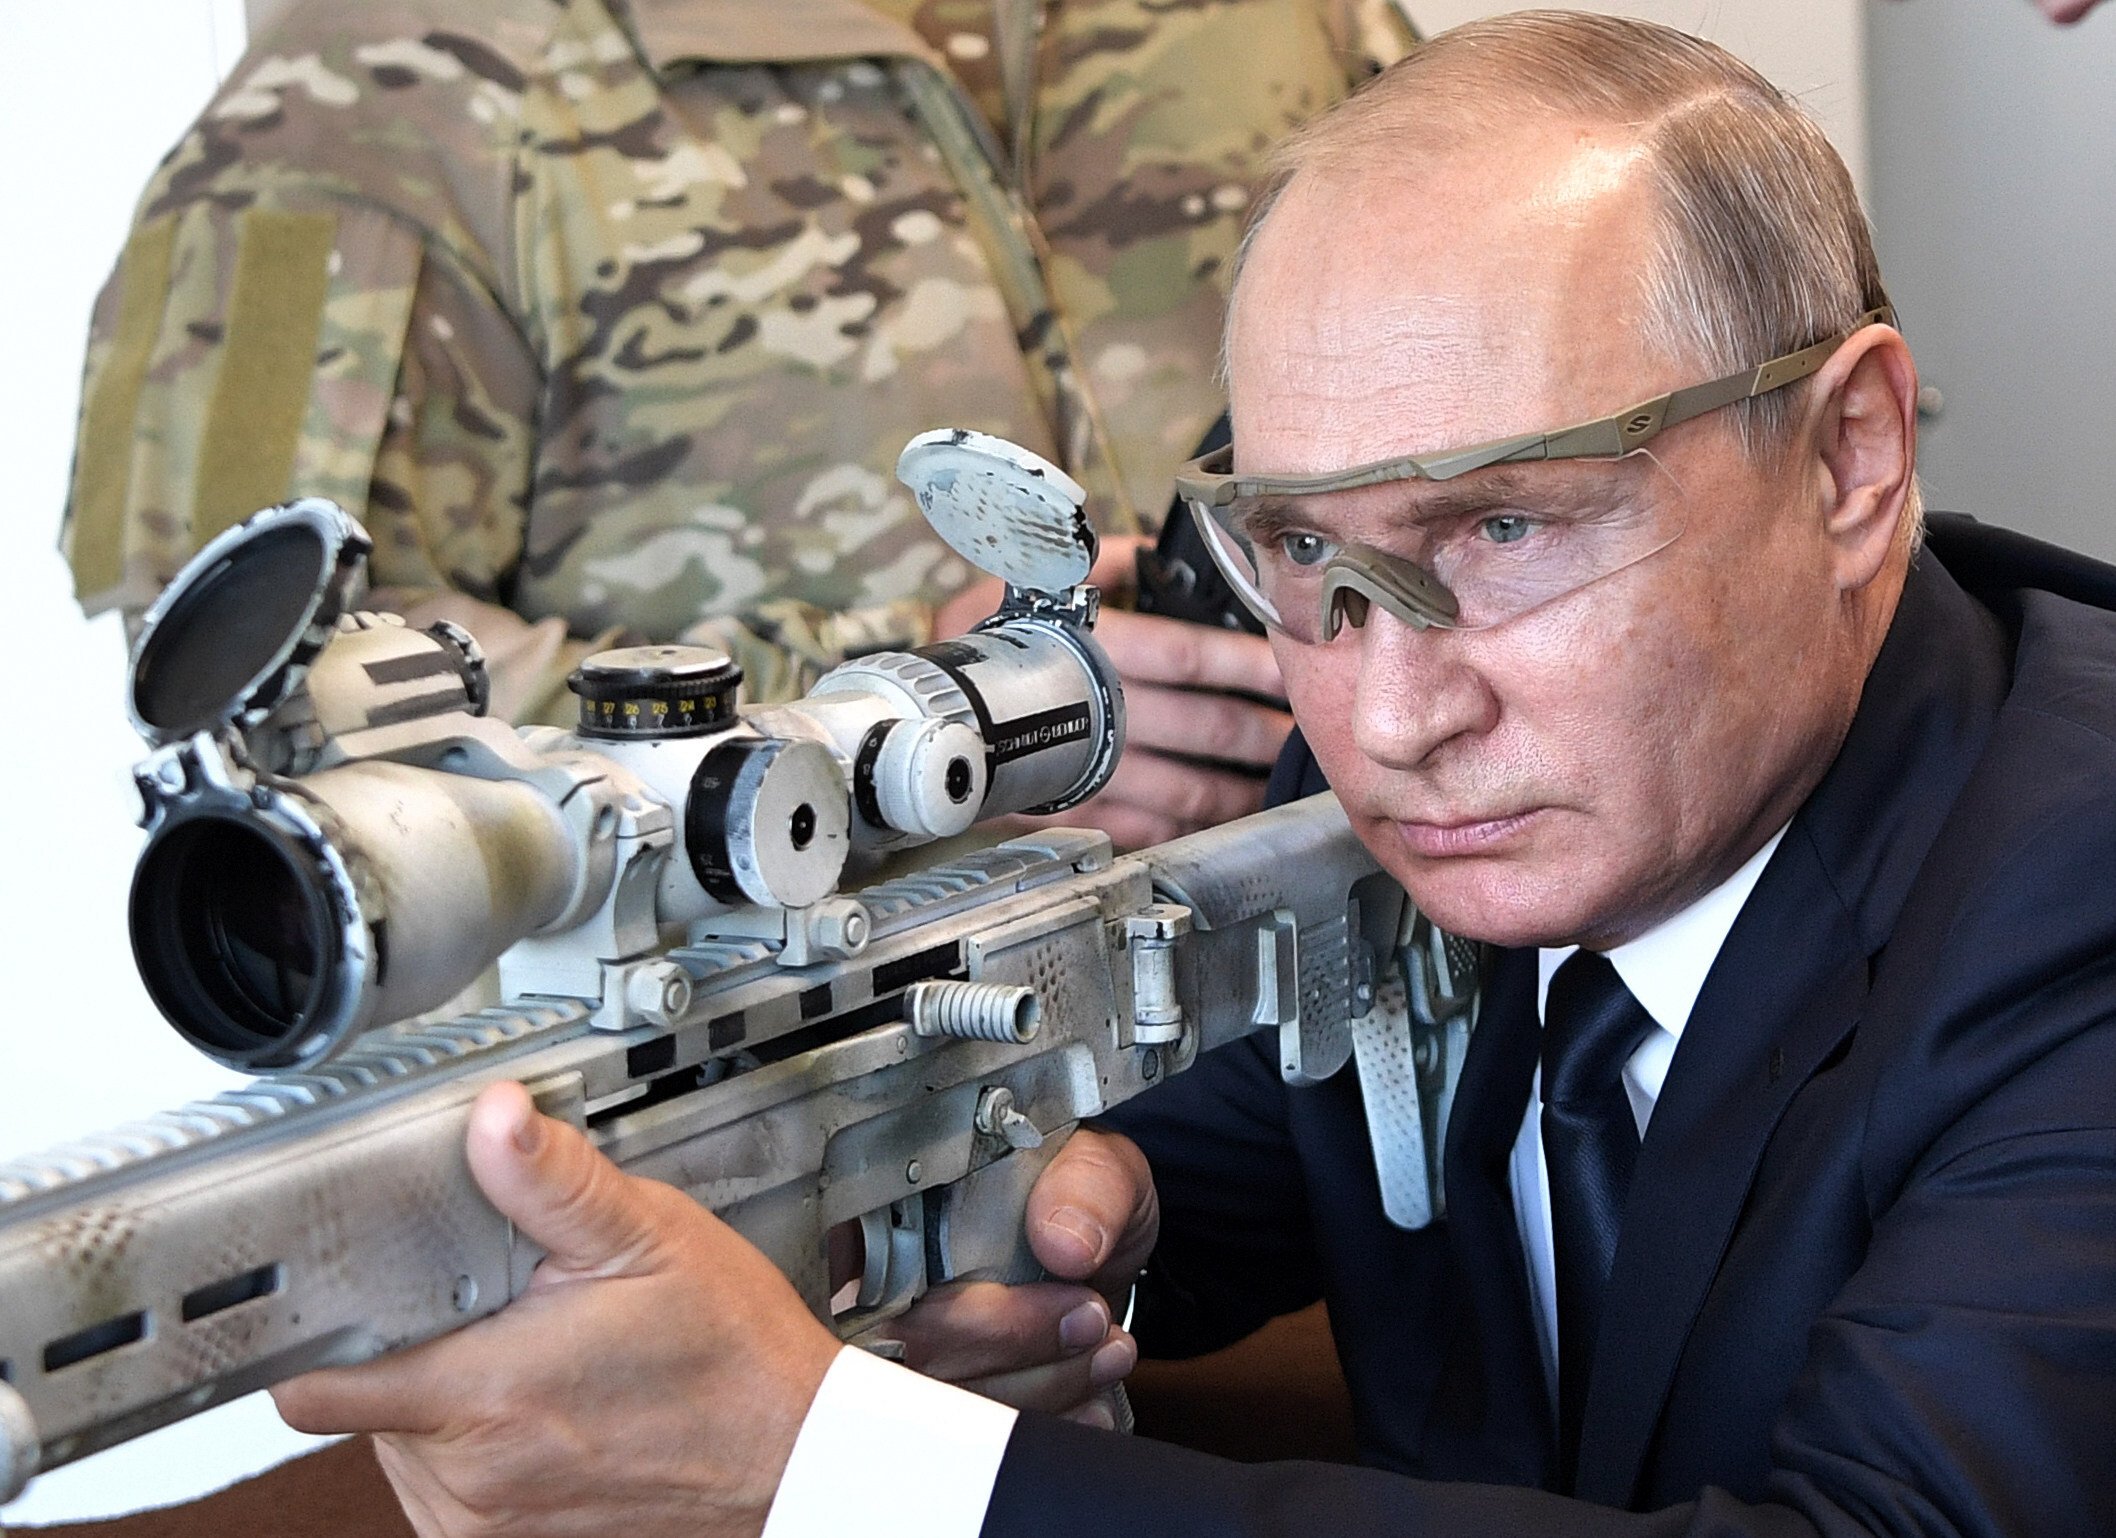 Vladimir Putin aims a sniper rifle while visiting a military exhibition near Moscow, Russia, in September 2018. Photo: Kremlin Pool Photo via AP